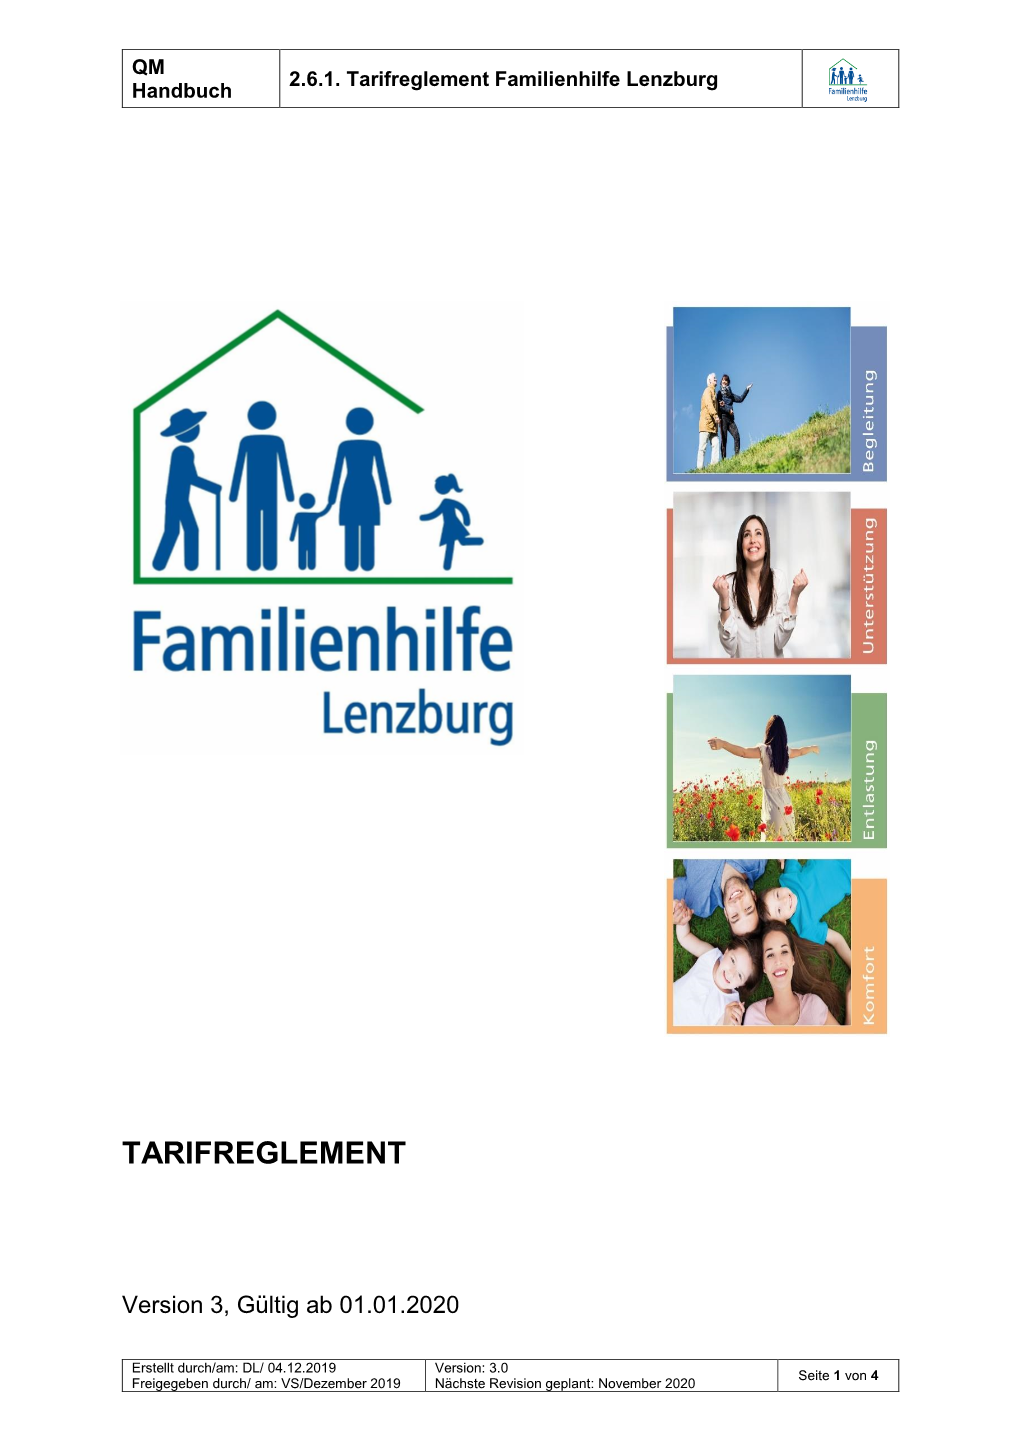 Tarifreglement Familienhilfe Lenzburg Handbuch